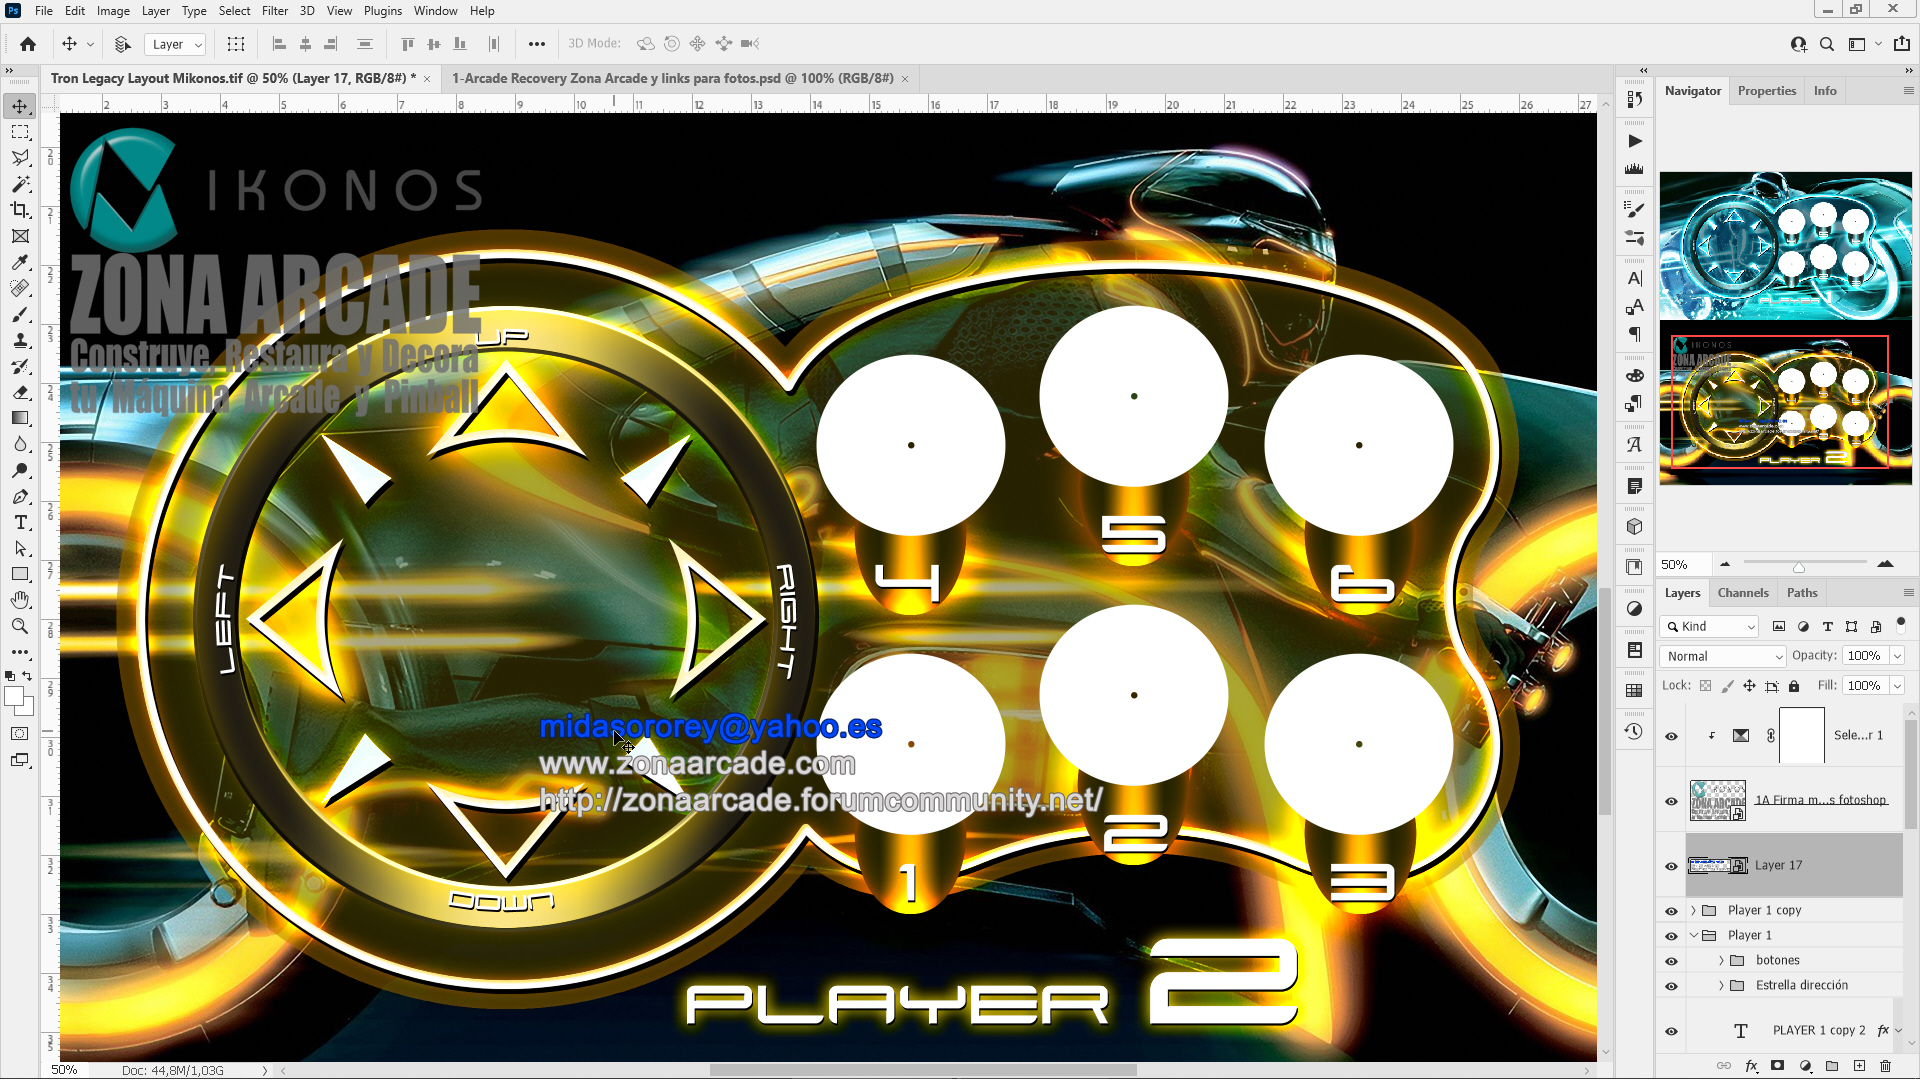 Tron-Legacy-Button-Joystick-Arcade-Layout-Designed-Mikonos12